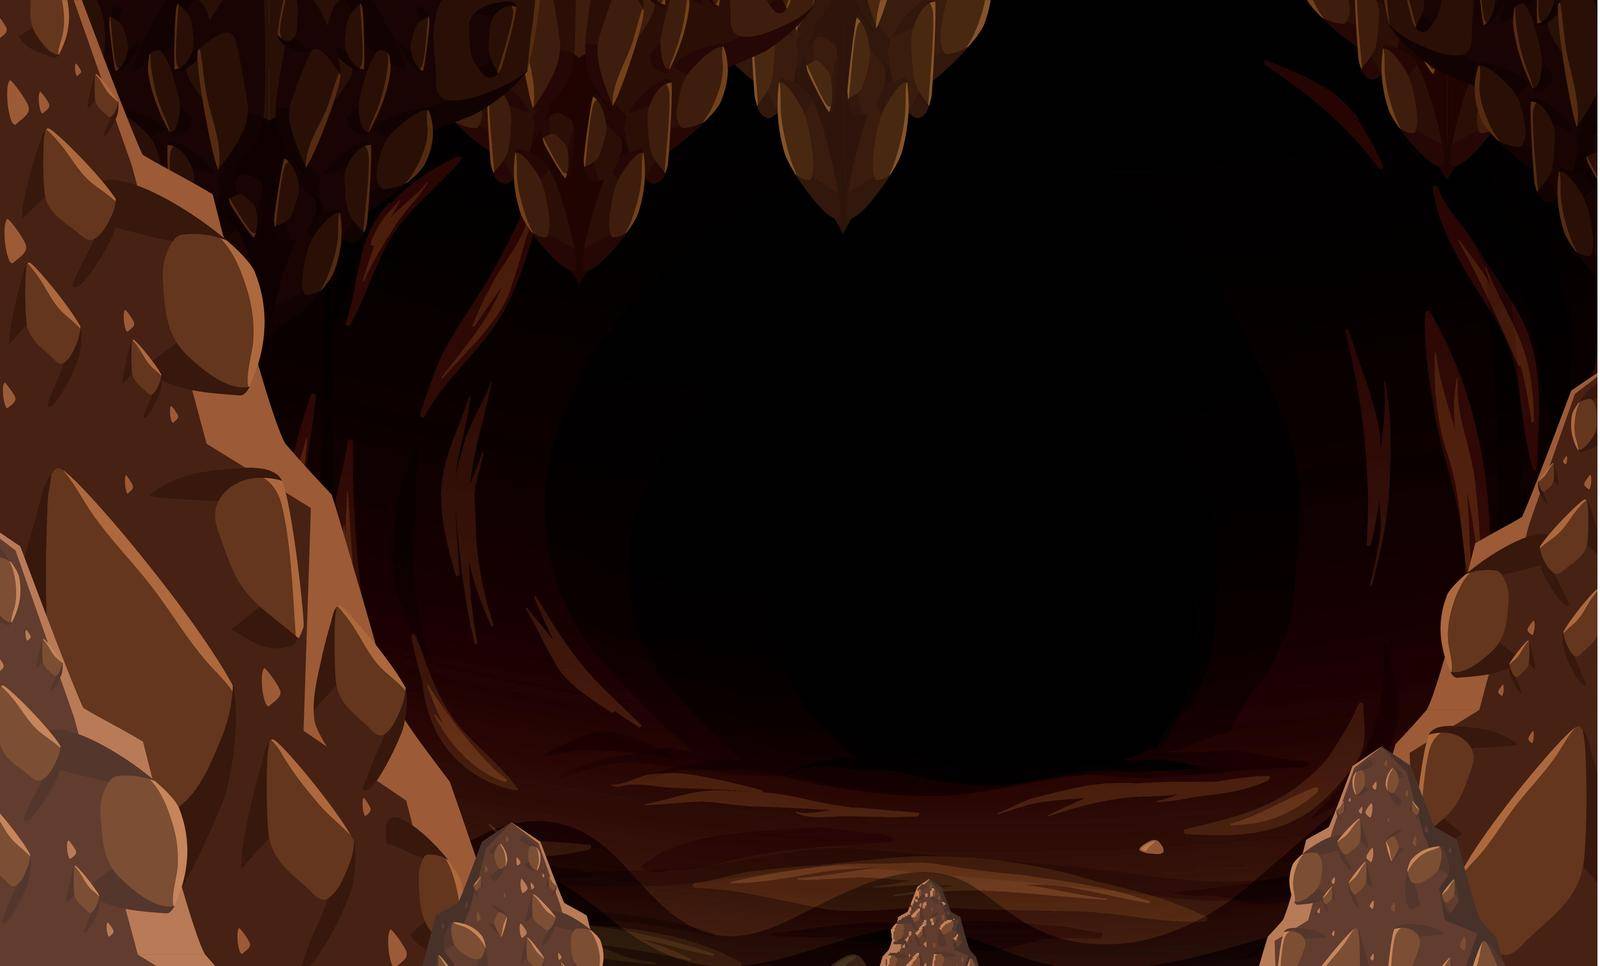 A dark stone cave illustration